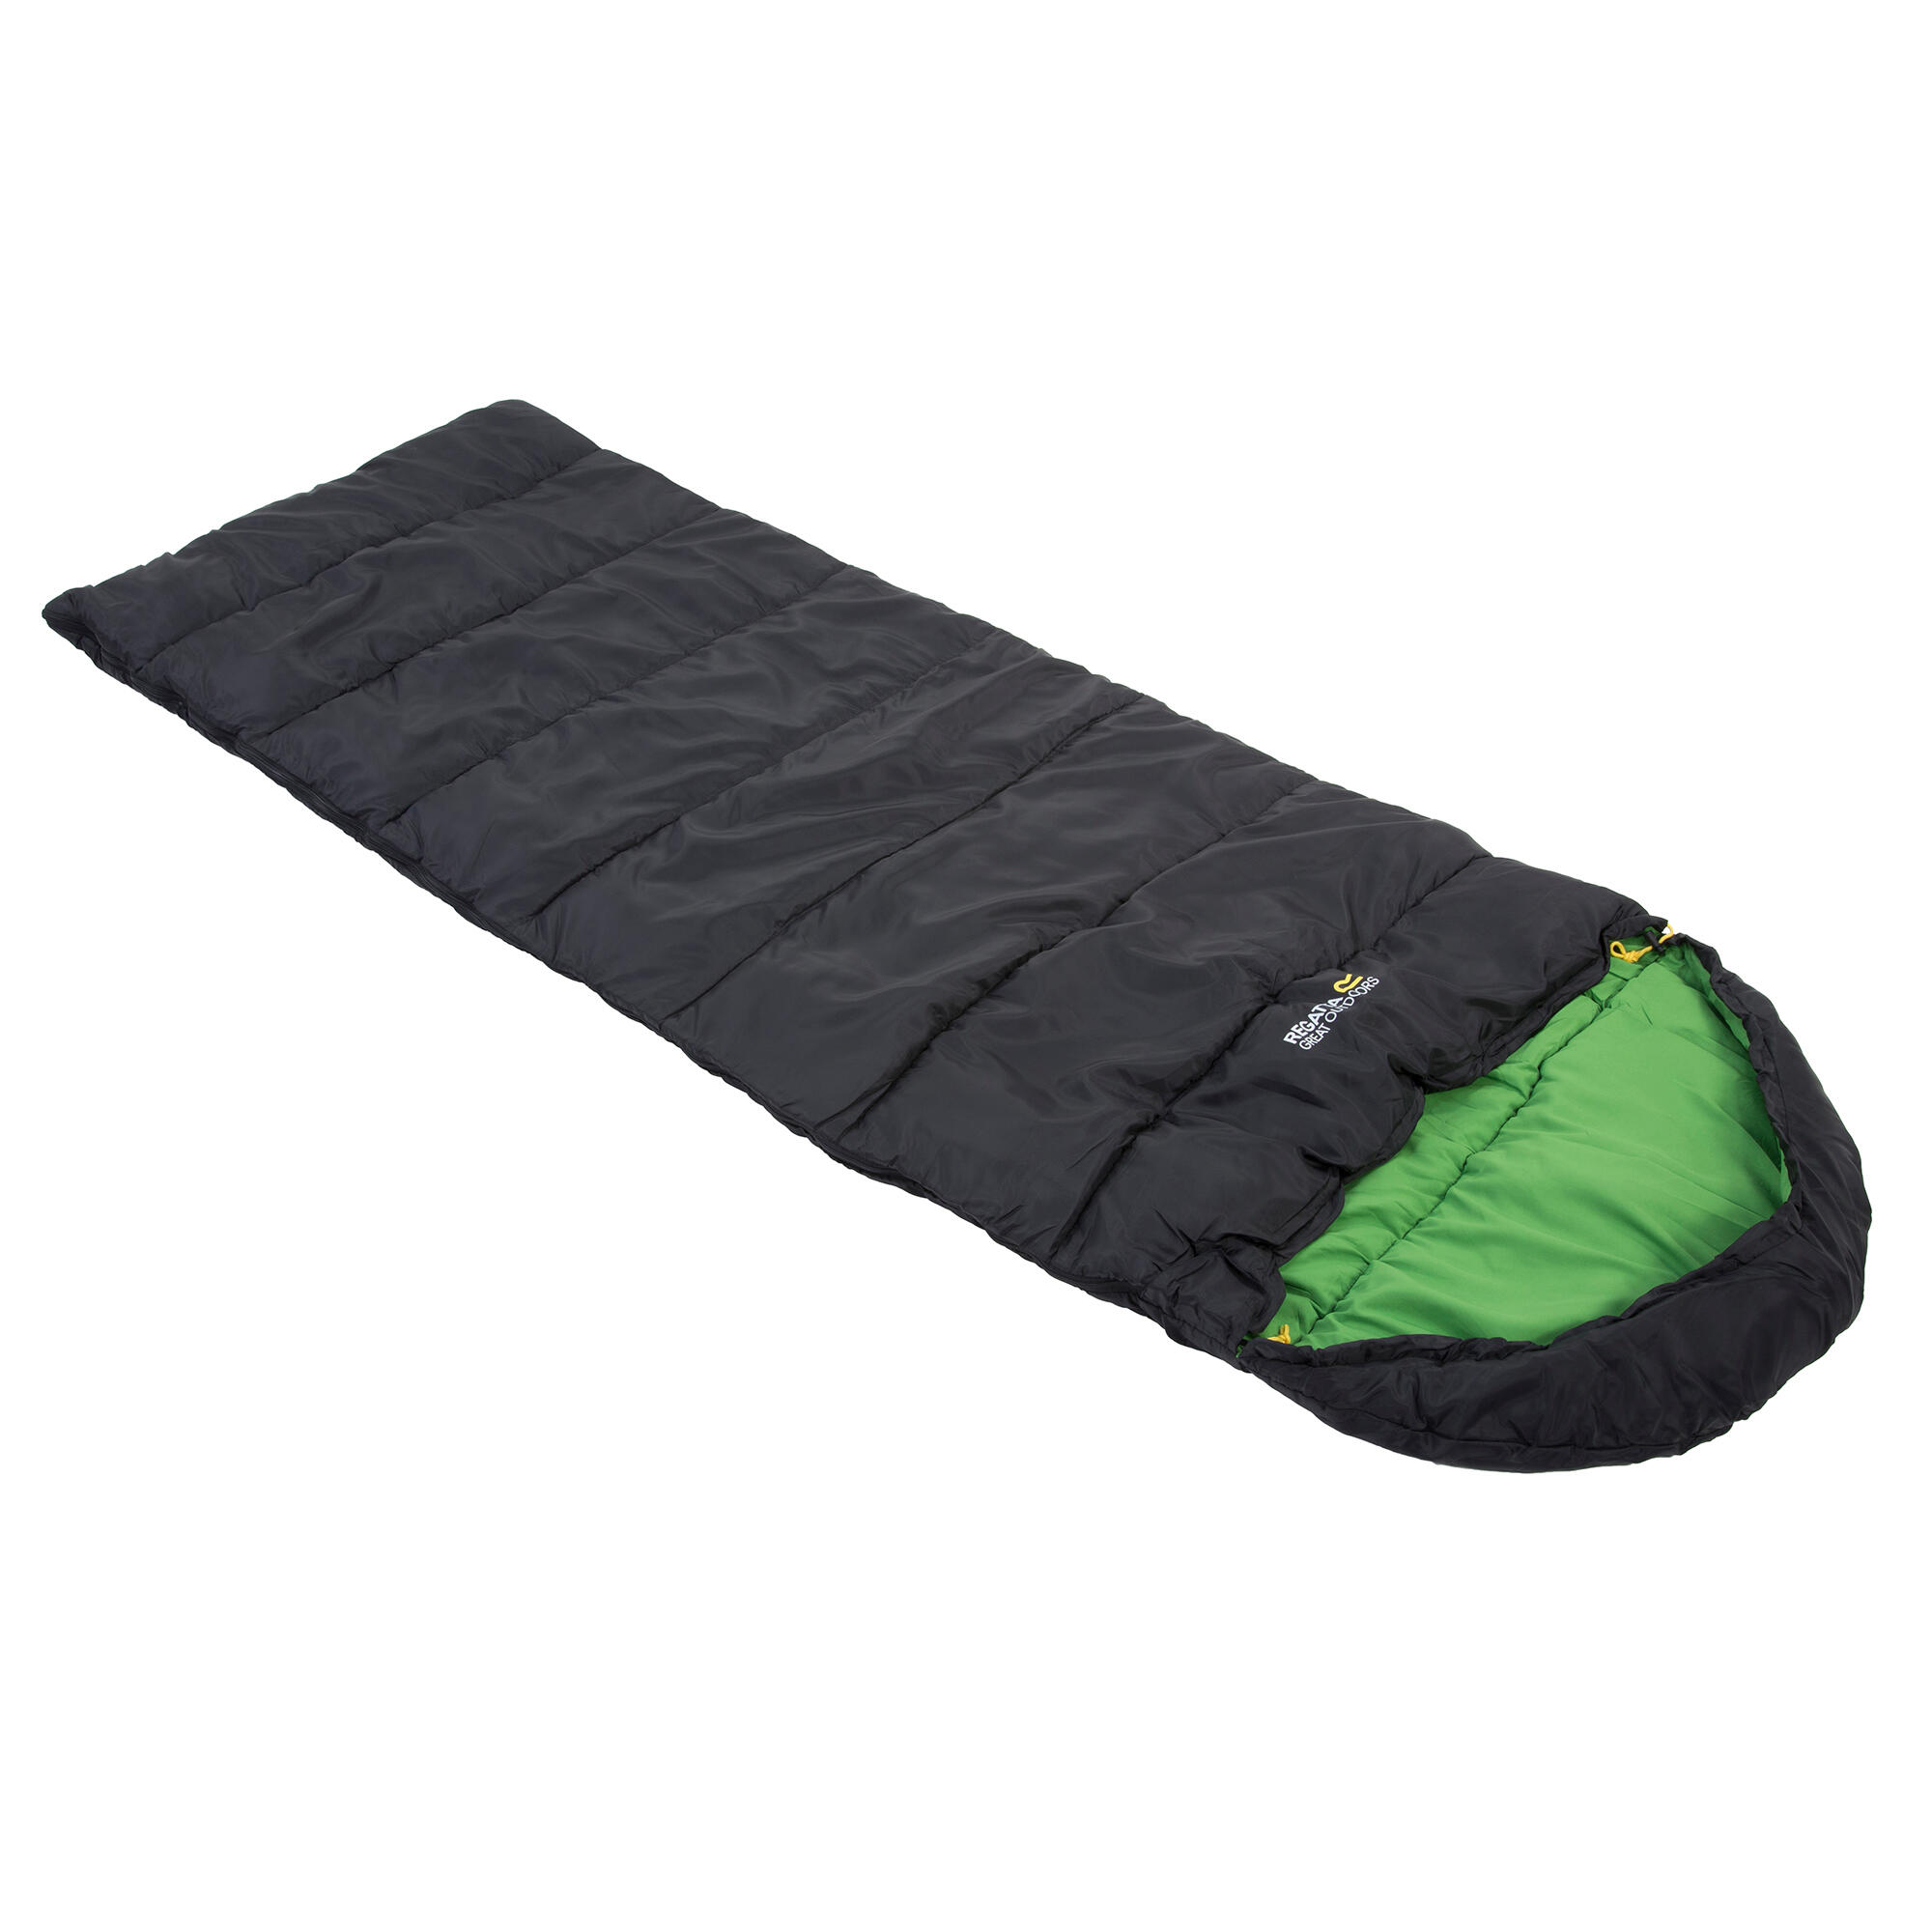 REGATTA Hana 200 Adults' Camping Sleeping Bag - Black